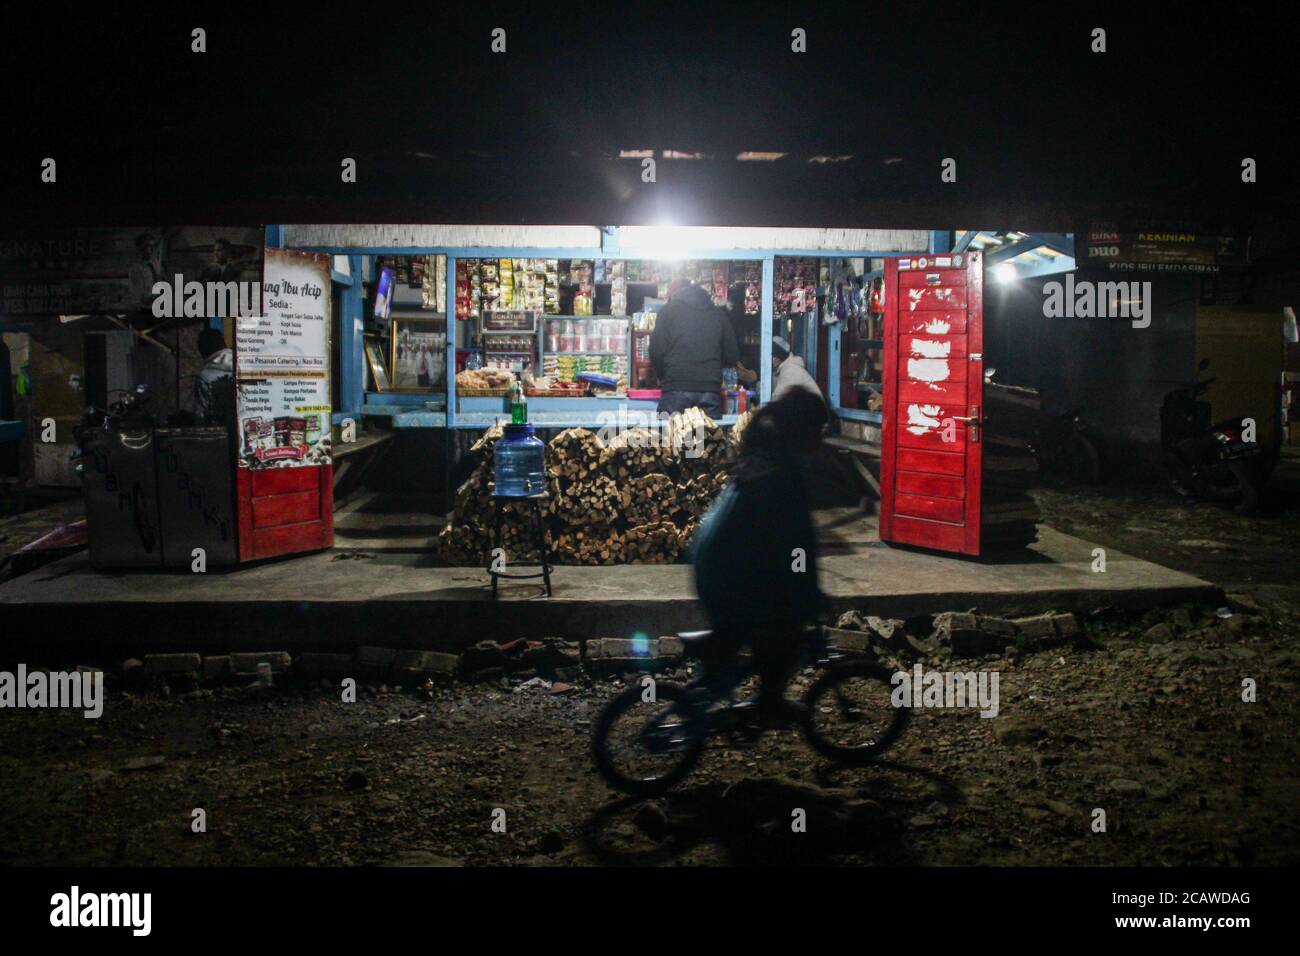 A cyclist rides past a snack shop that has reopened in Cai Rancaupas.  Kampung Cai Rancaupas